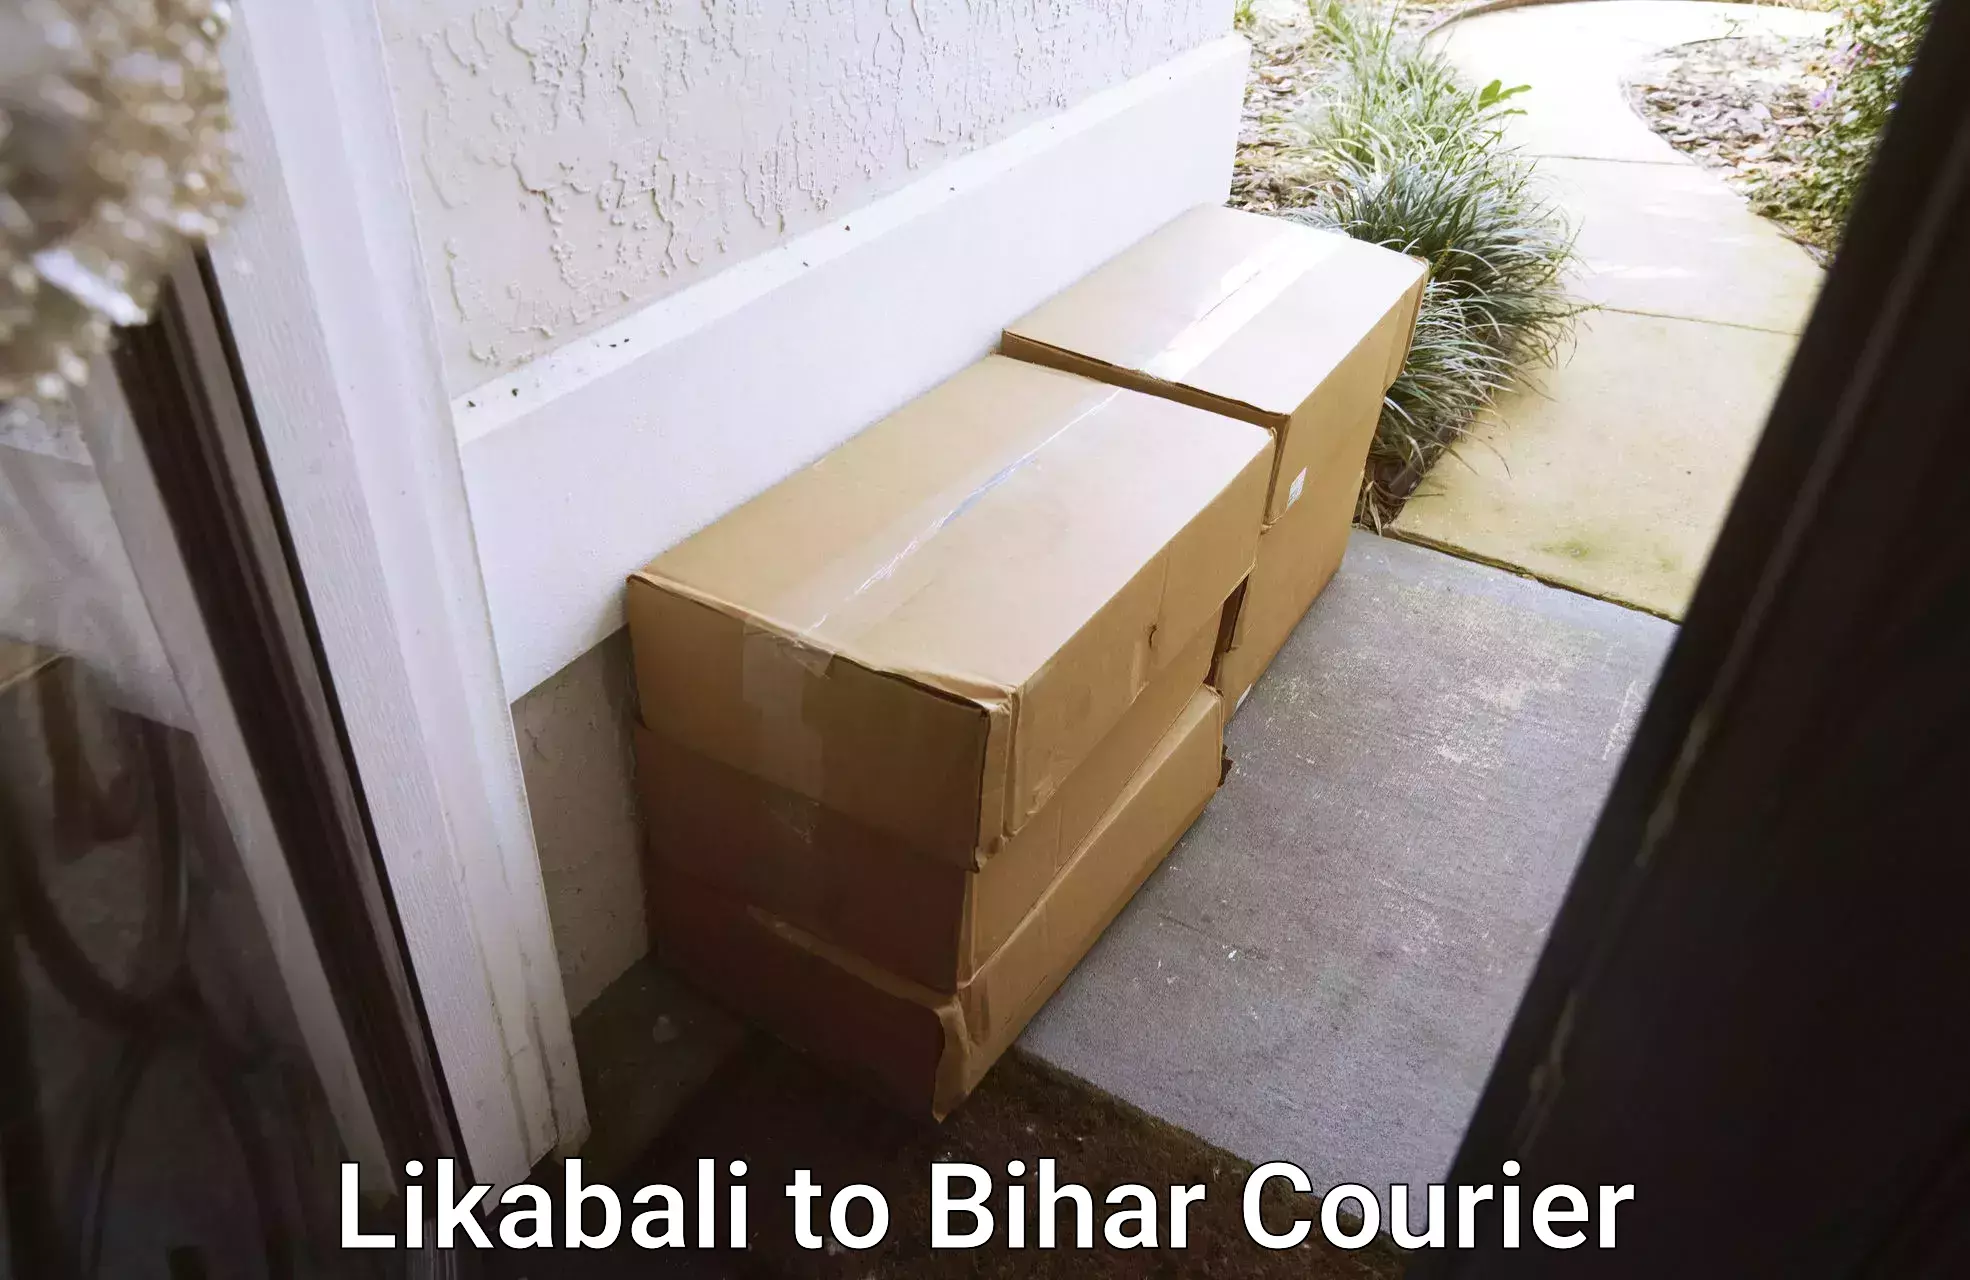 Express package handling in Likabali to Bihar